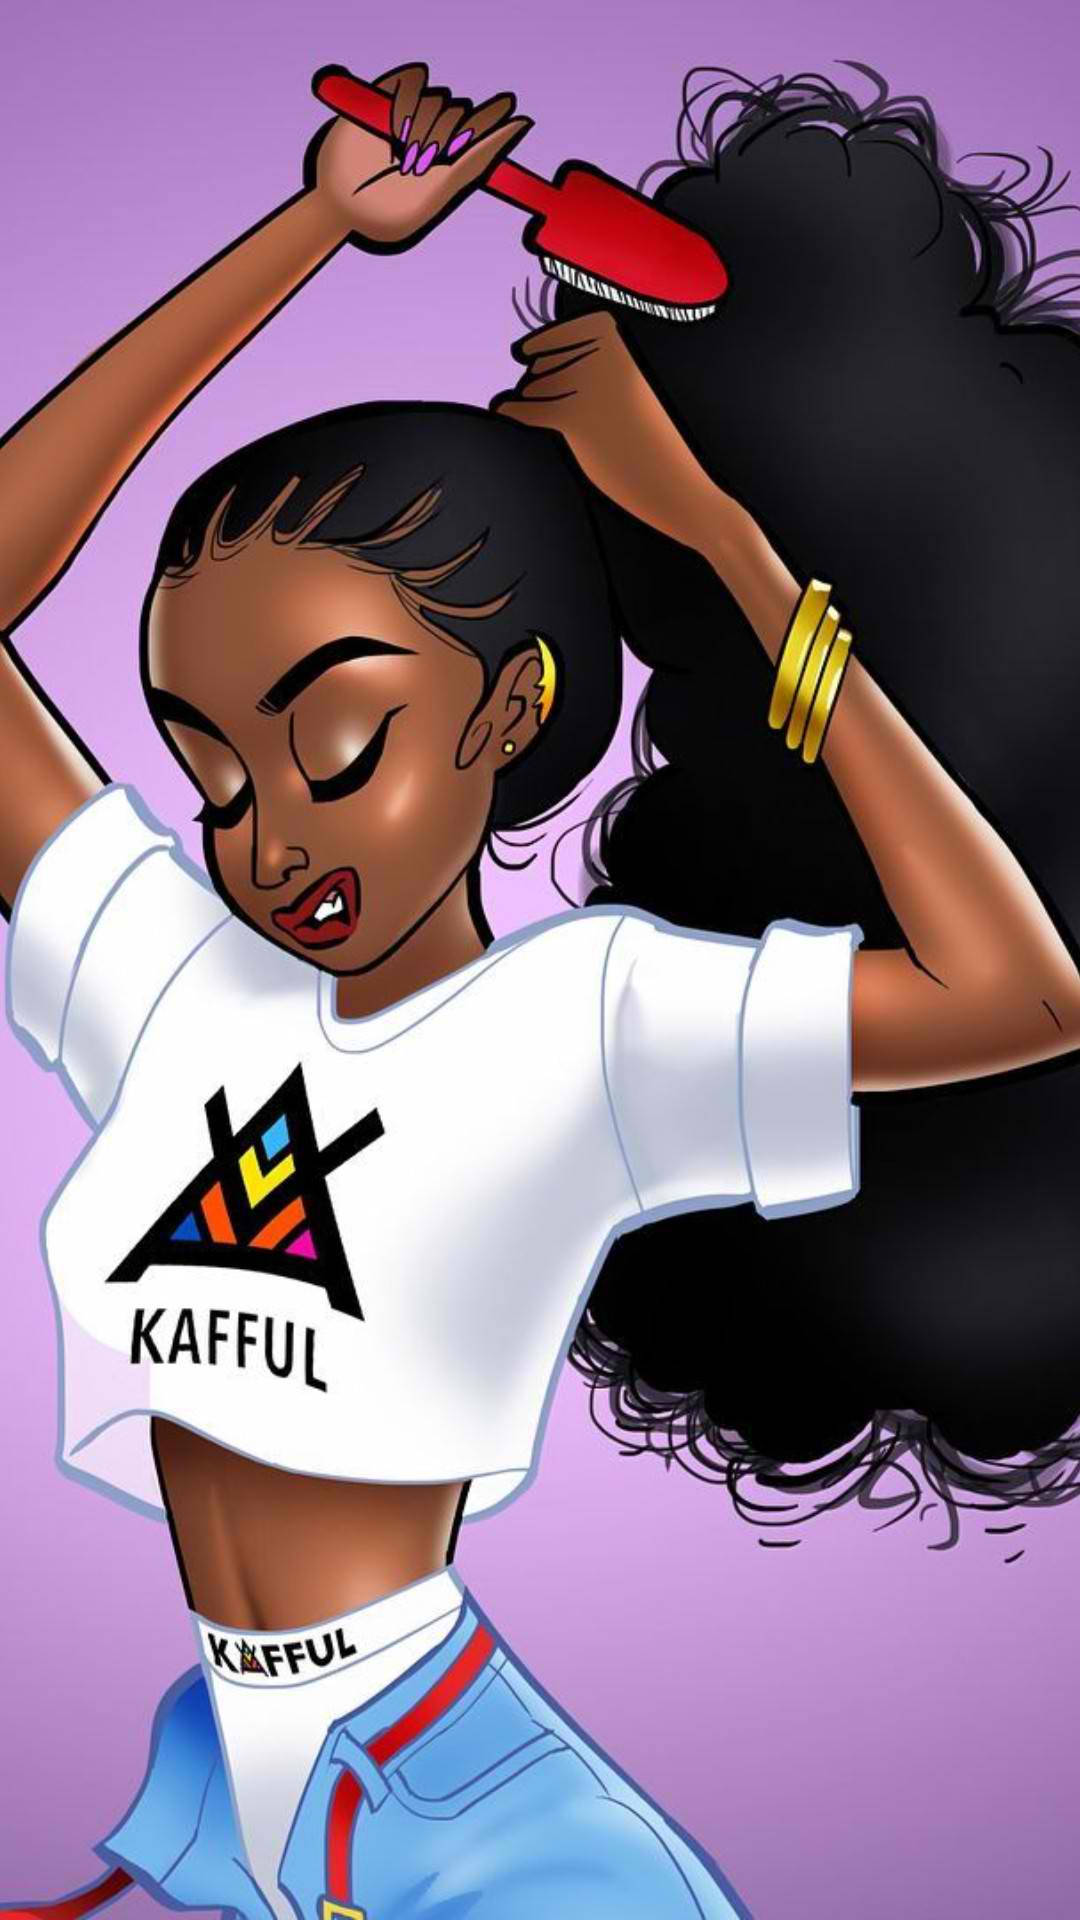 Top 999+ Cute Black Girl Wallpaper Full HD, 4K✅Free to Use